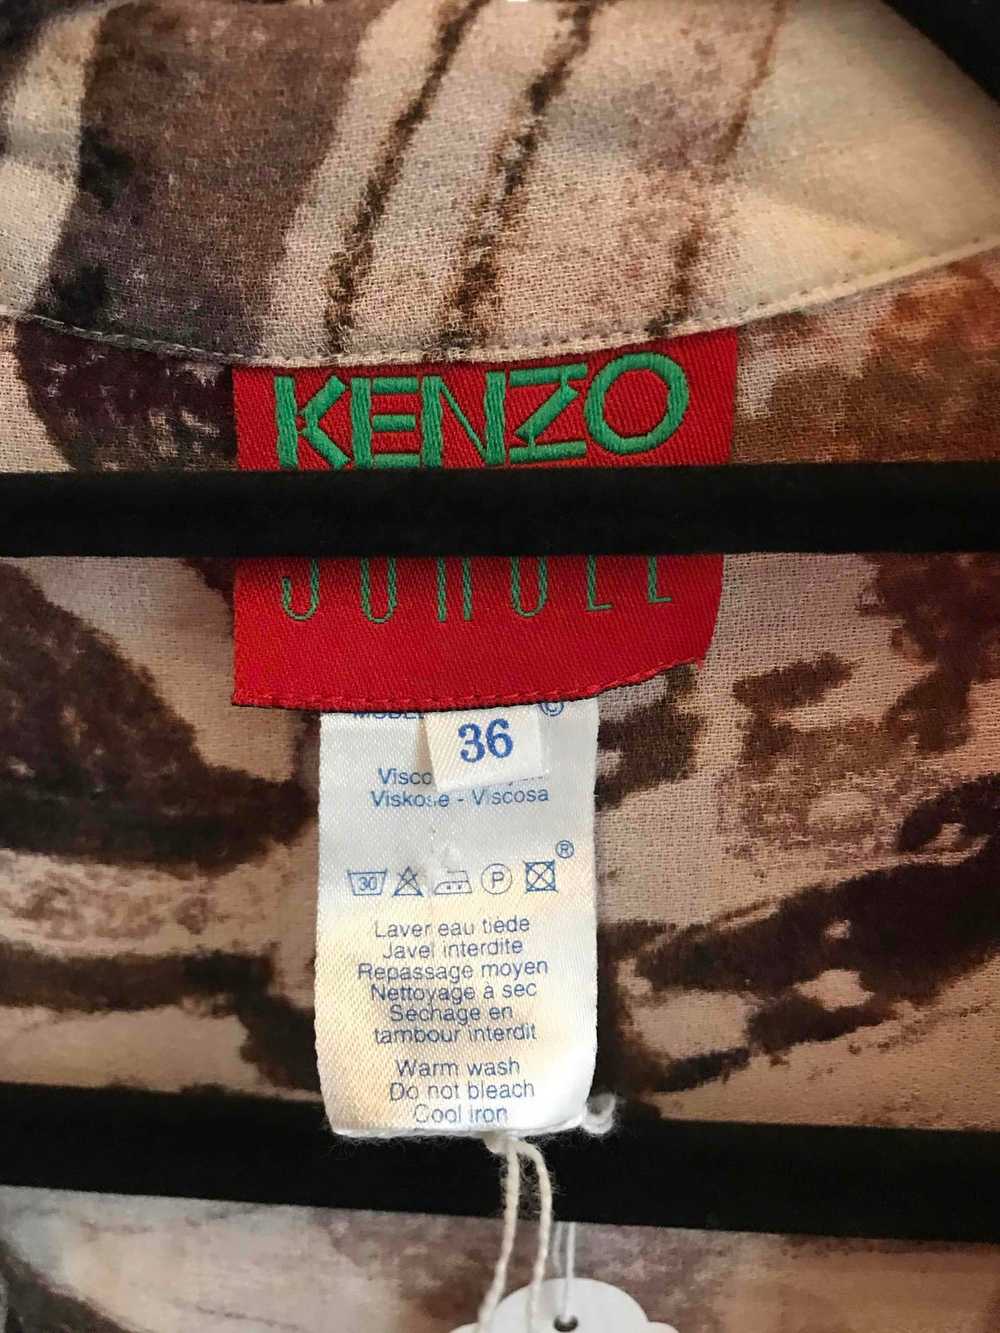 Chemise Kenzo - Chemise Kenzo à motifs lilas, mar… - image 4